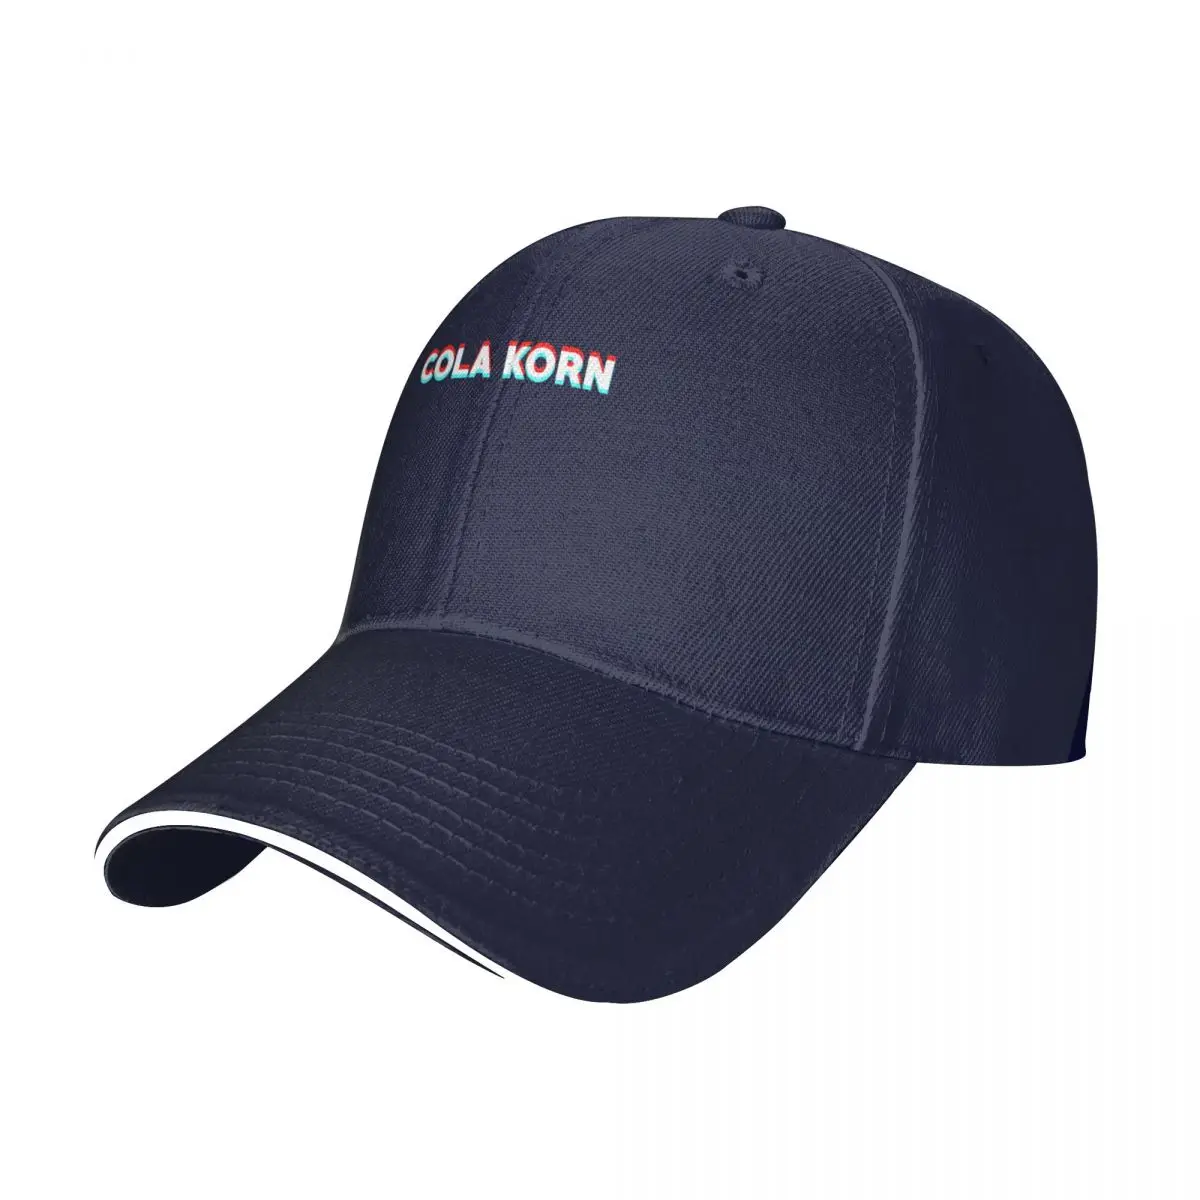 Новая бейсбольная кепка Korn группы Alkohol Geschenk, детская шляпа, Кепка на заказ, Уличная одежда, Женская Пляжная мода, Мужская